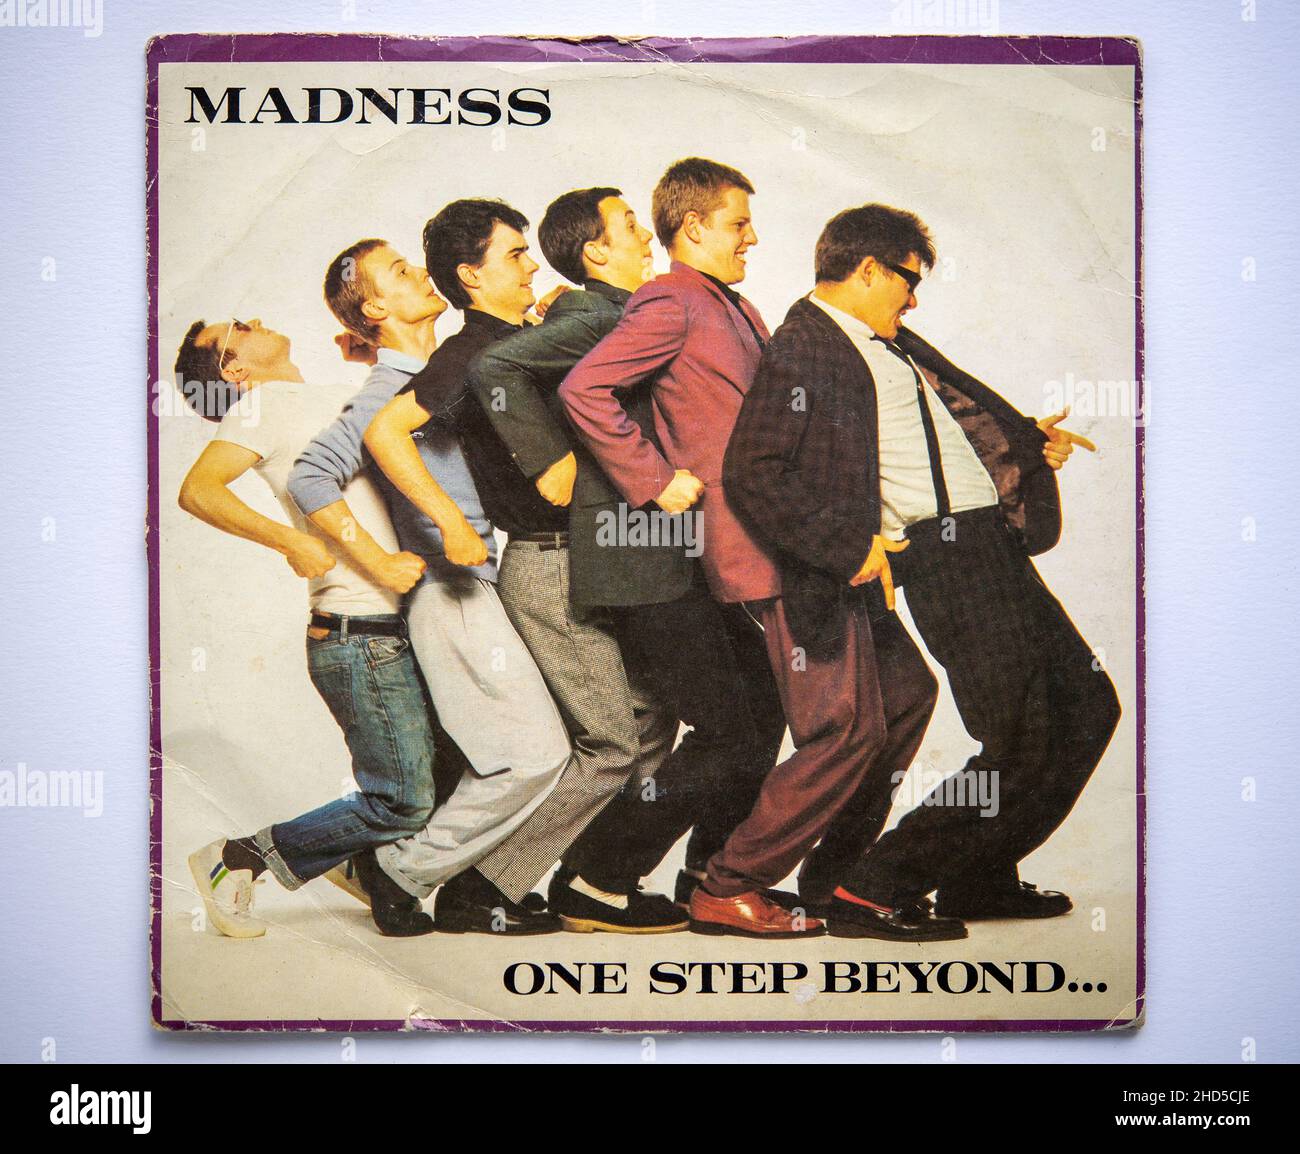 Copertina del singolo One Step Beyond by Madness, uscito nel 1979 Foto  stock - Alamy